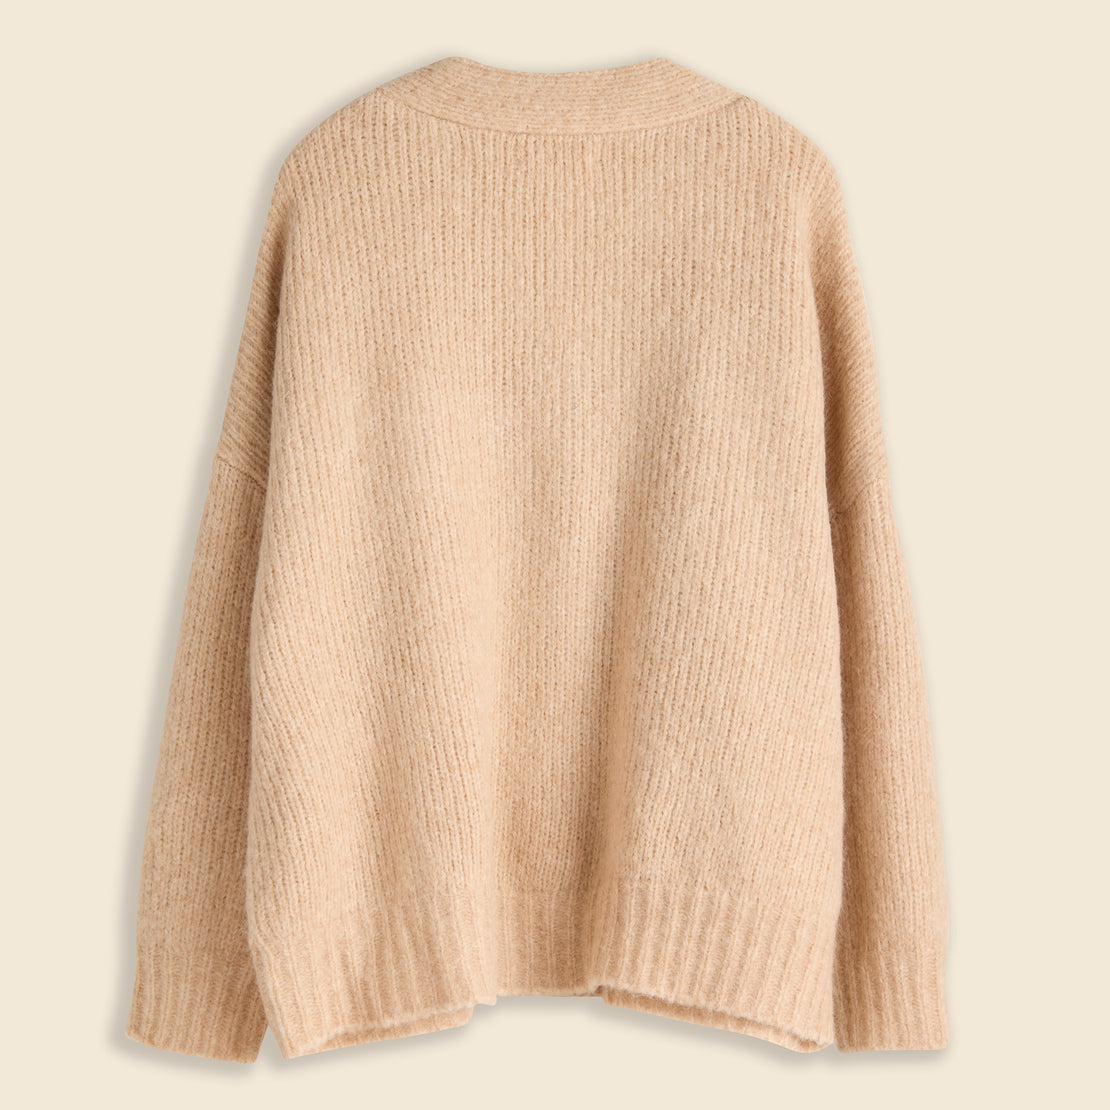 Amelia Cardigan - Grain - Atelier Delphine - STAG Provisions - W - Tops - Sweater